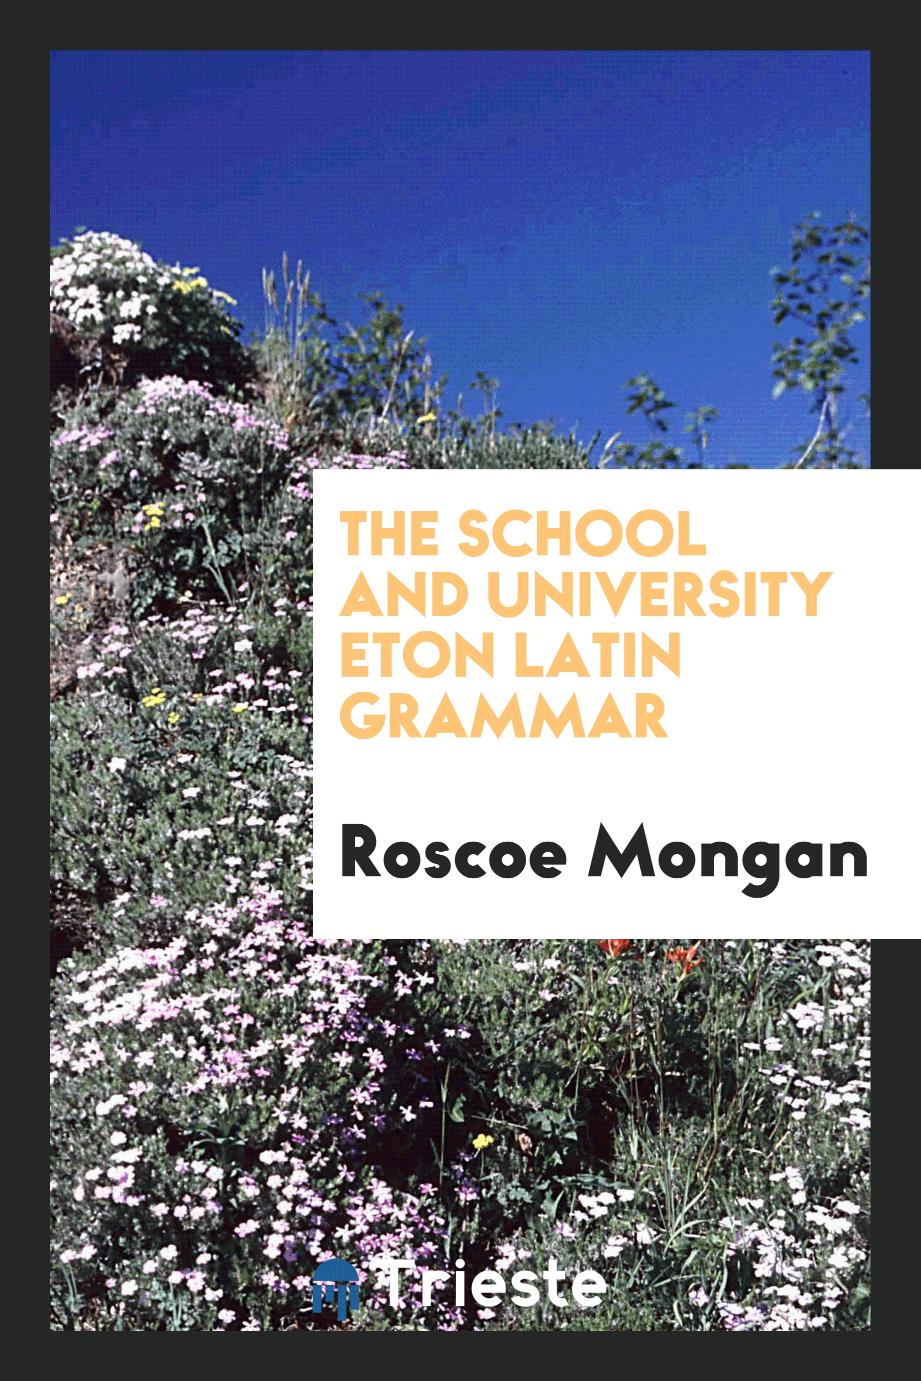 The School and University Eton Latin Grammar